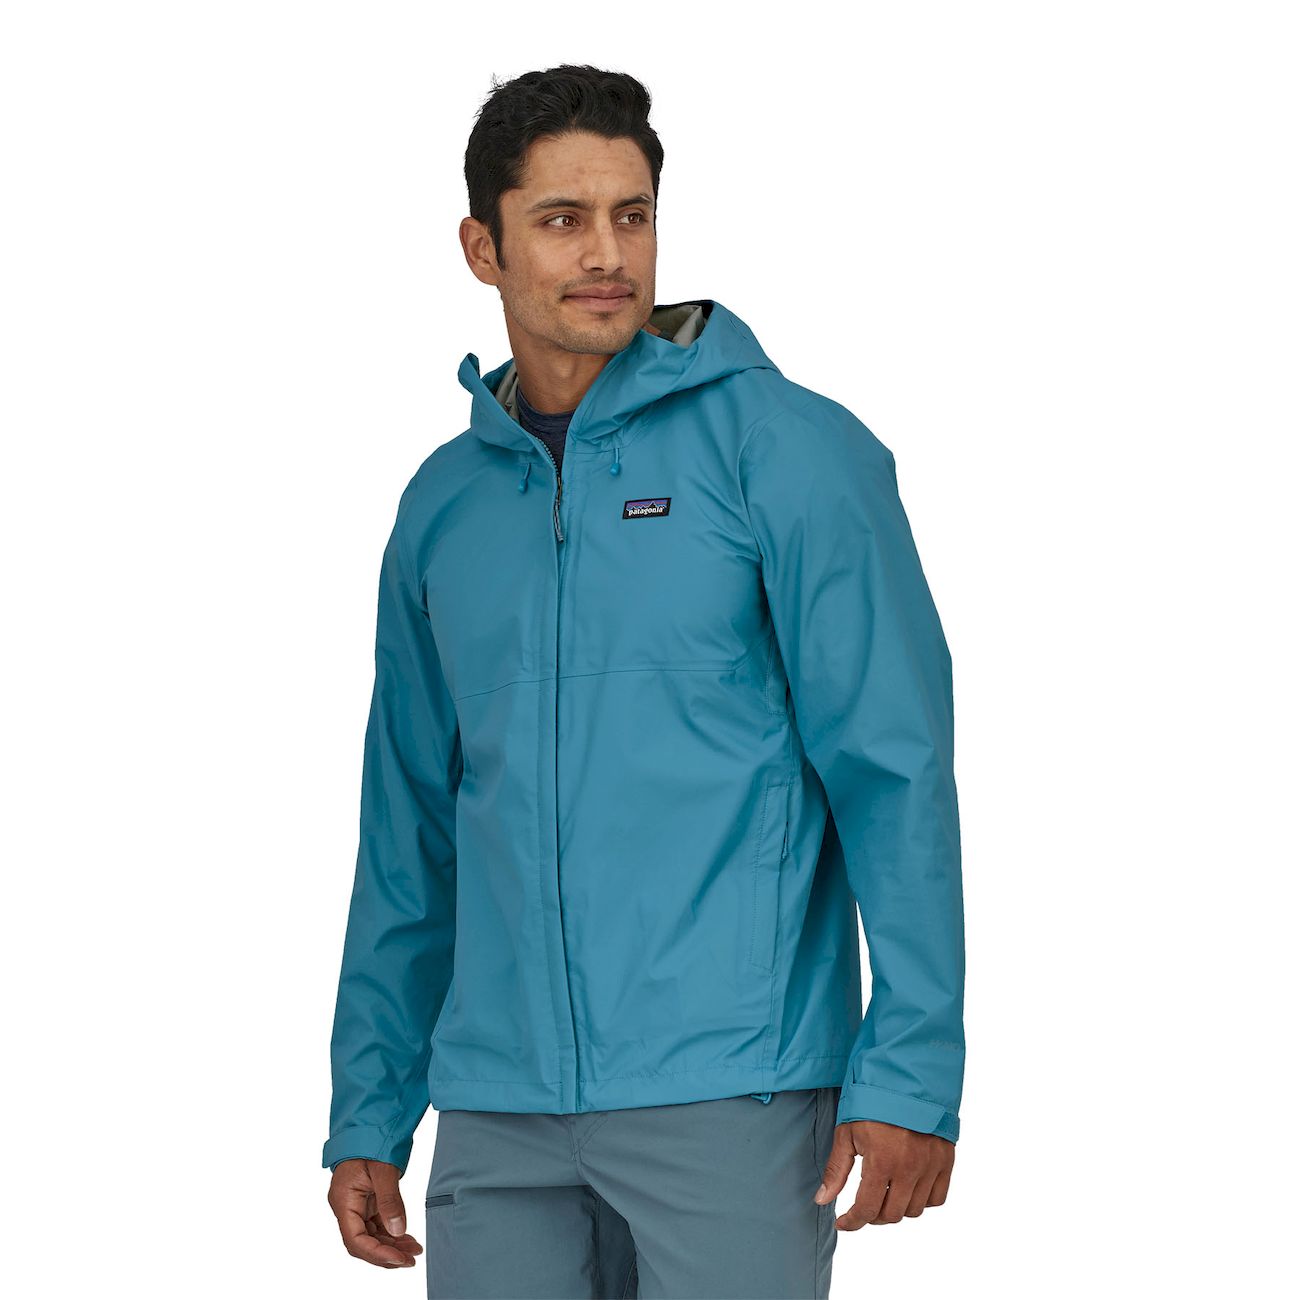 Patagonia Torrentshell 3L Jacket - Chaqueta impermeable - Hombre